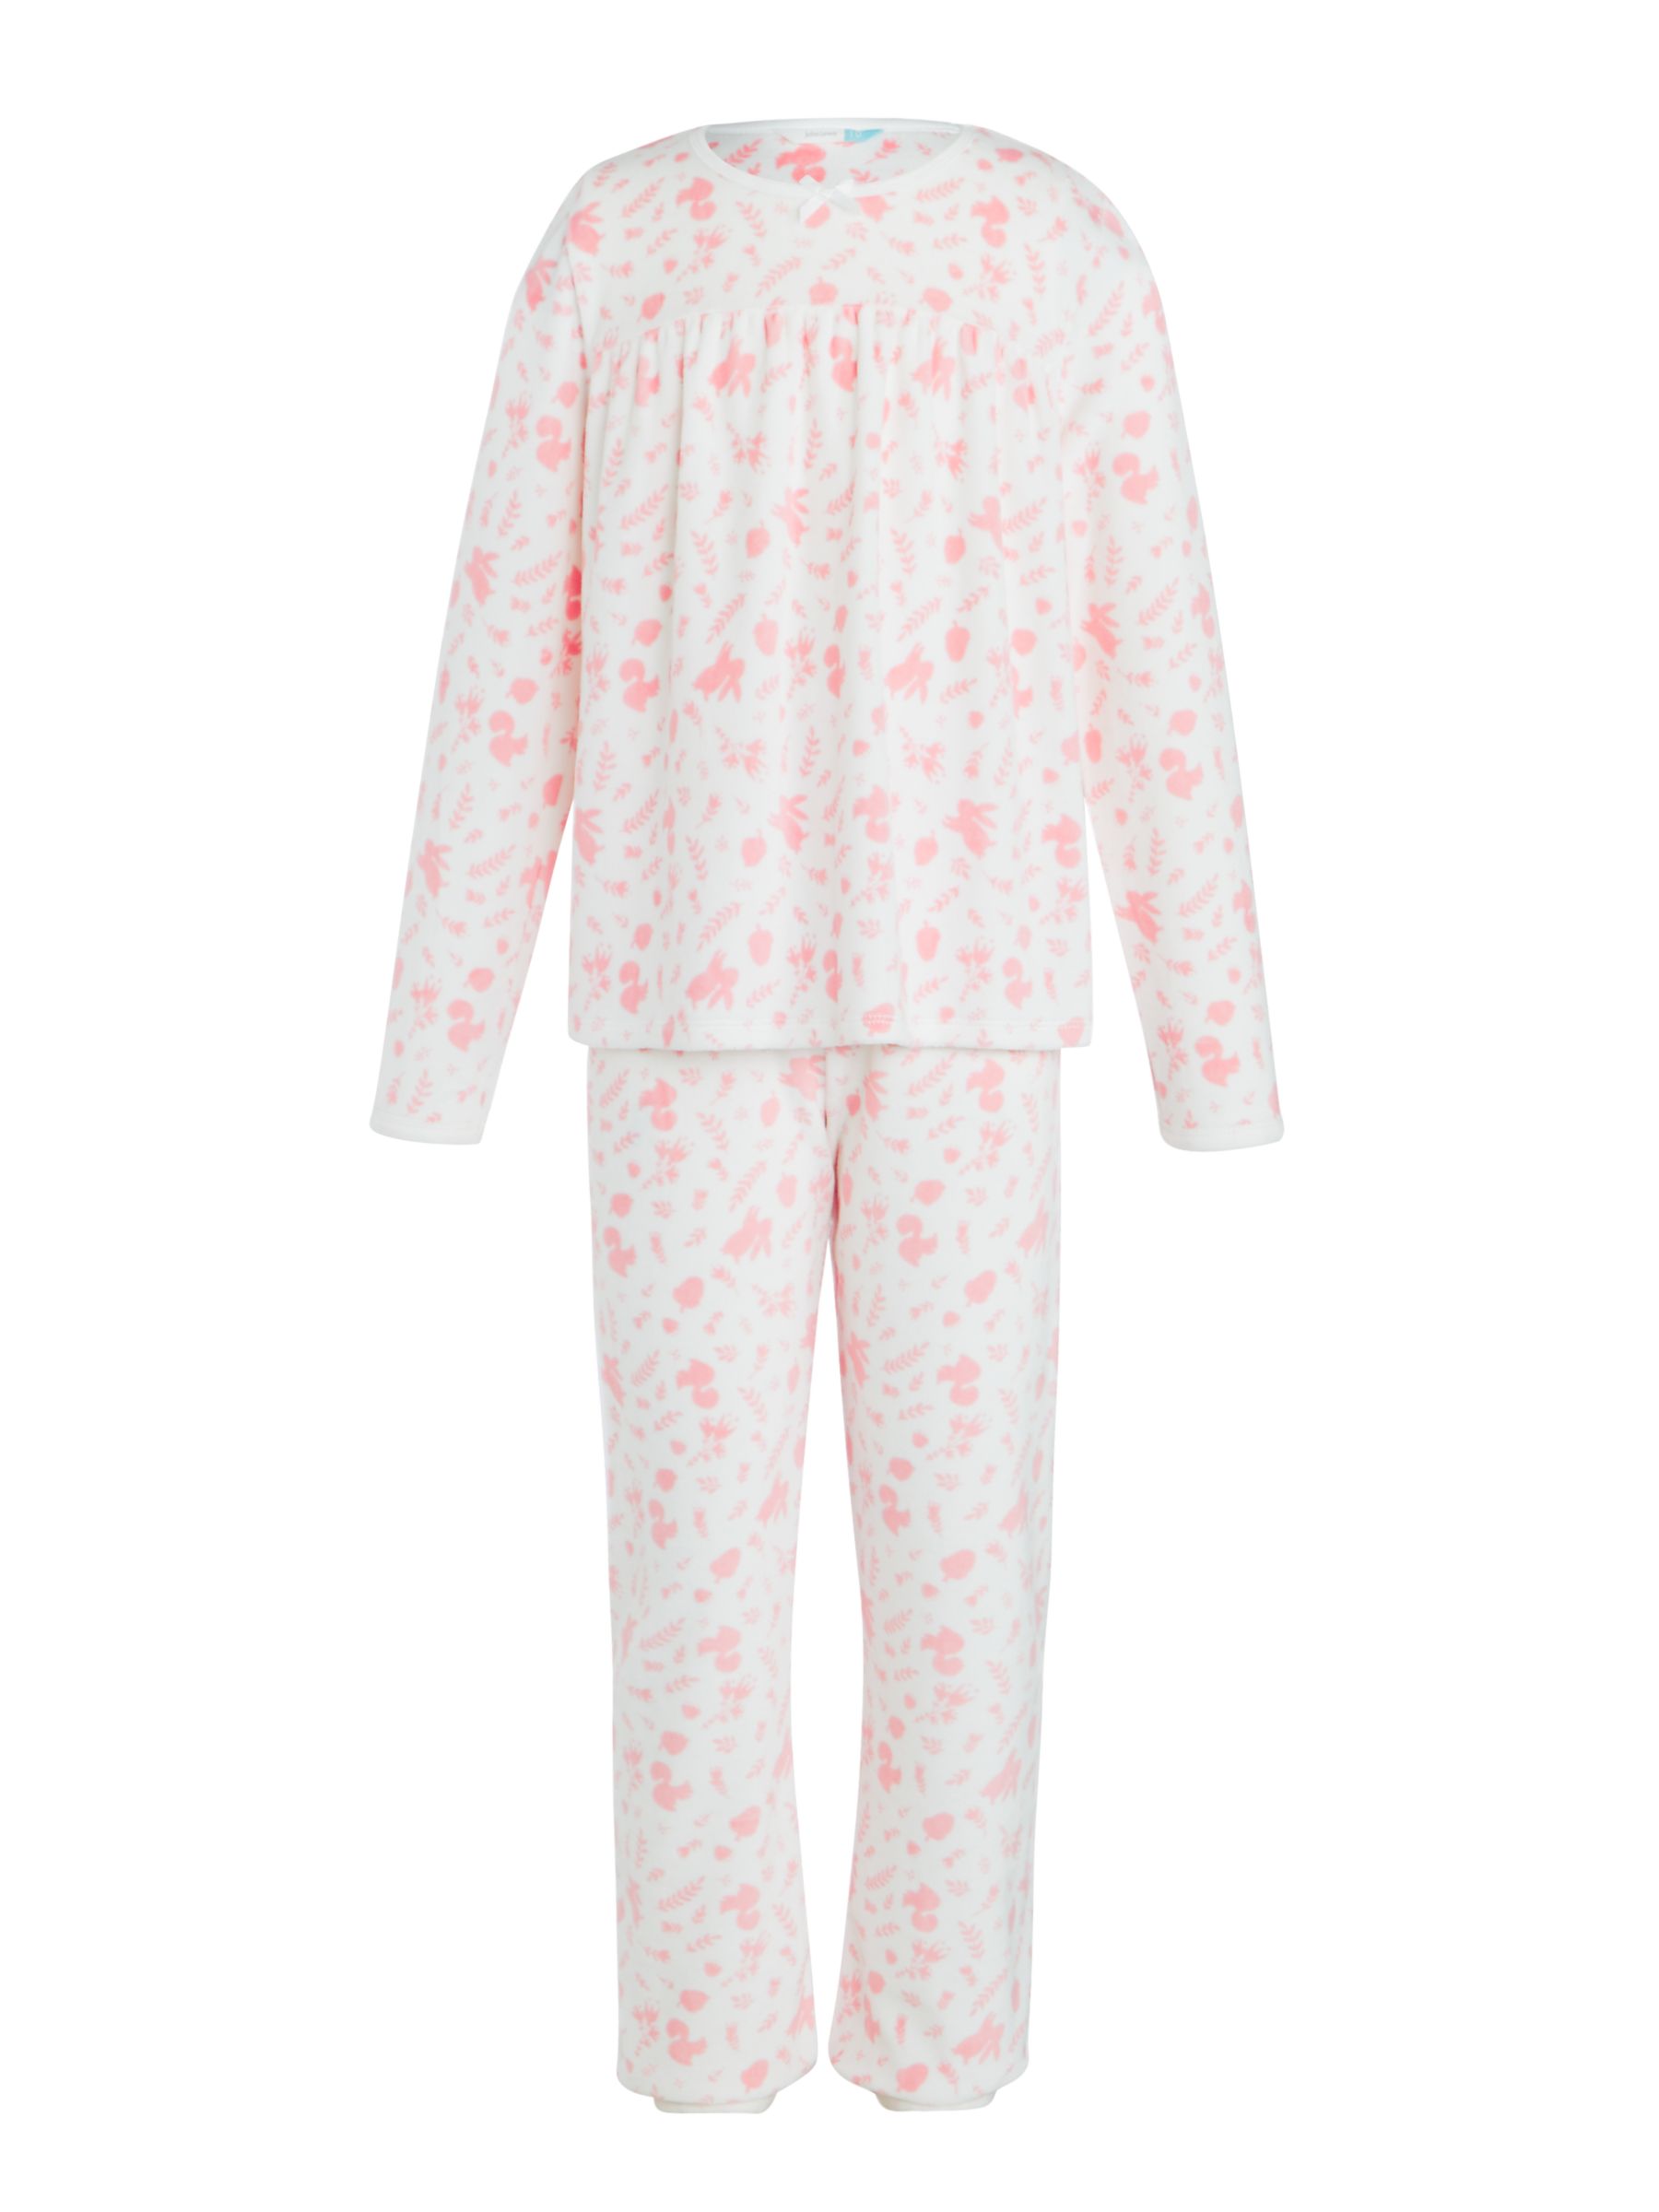 John Lewis Girls' Velour Woodland Pyjamas, Cream